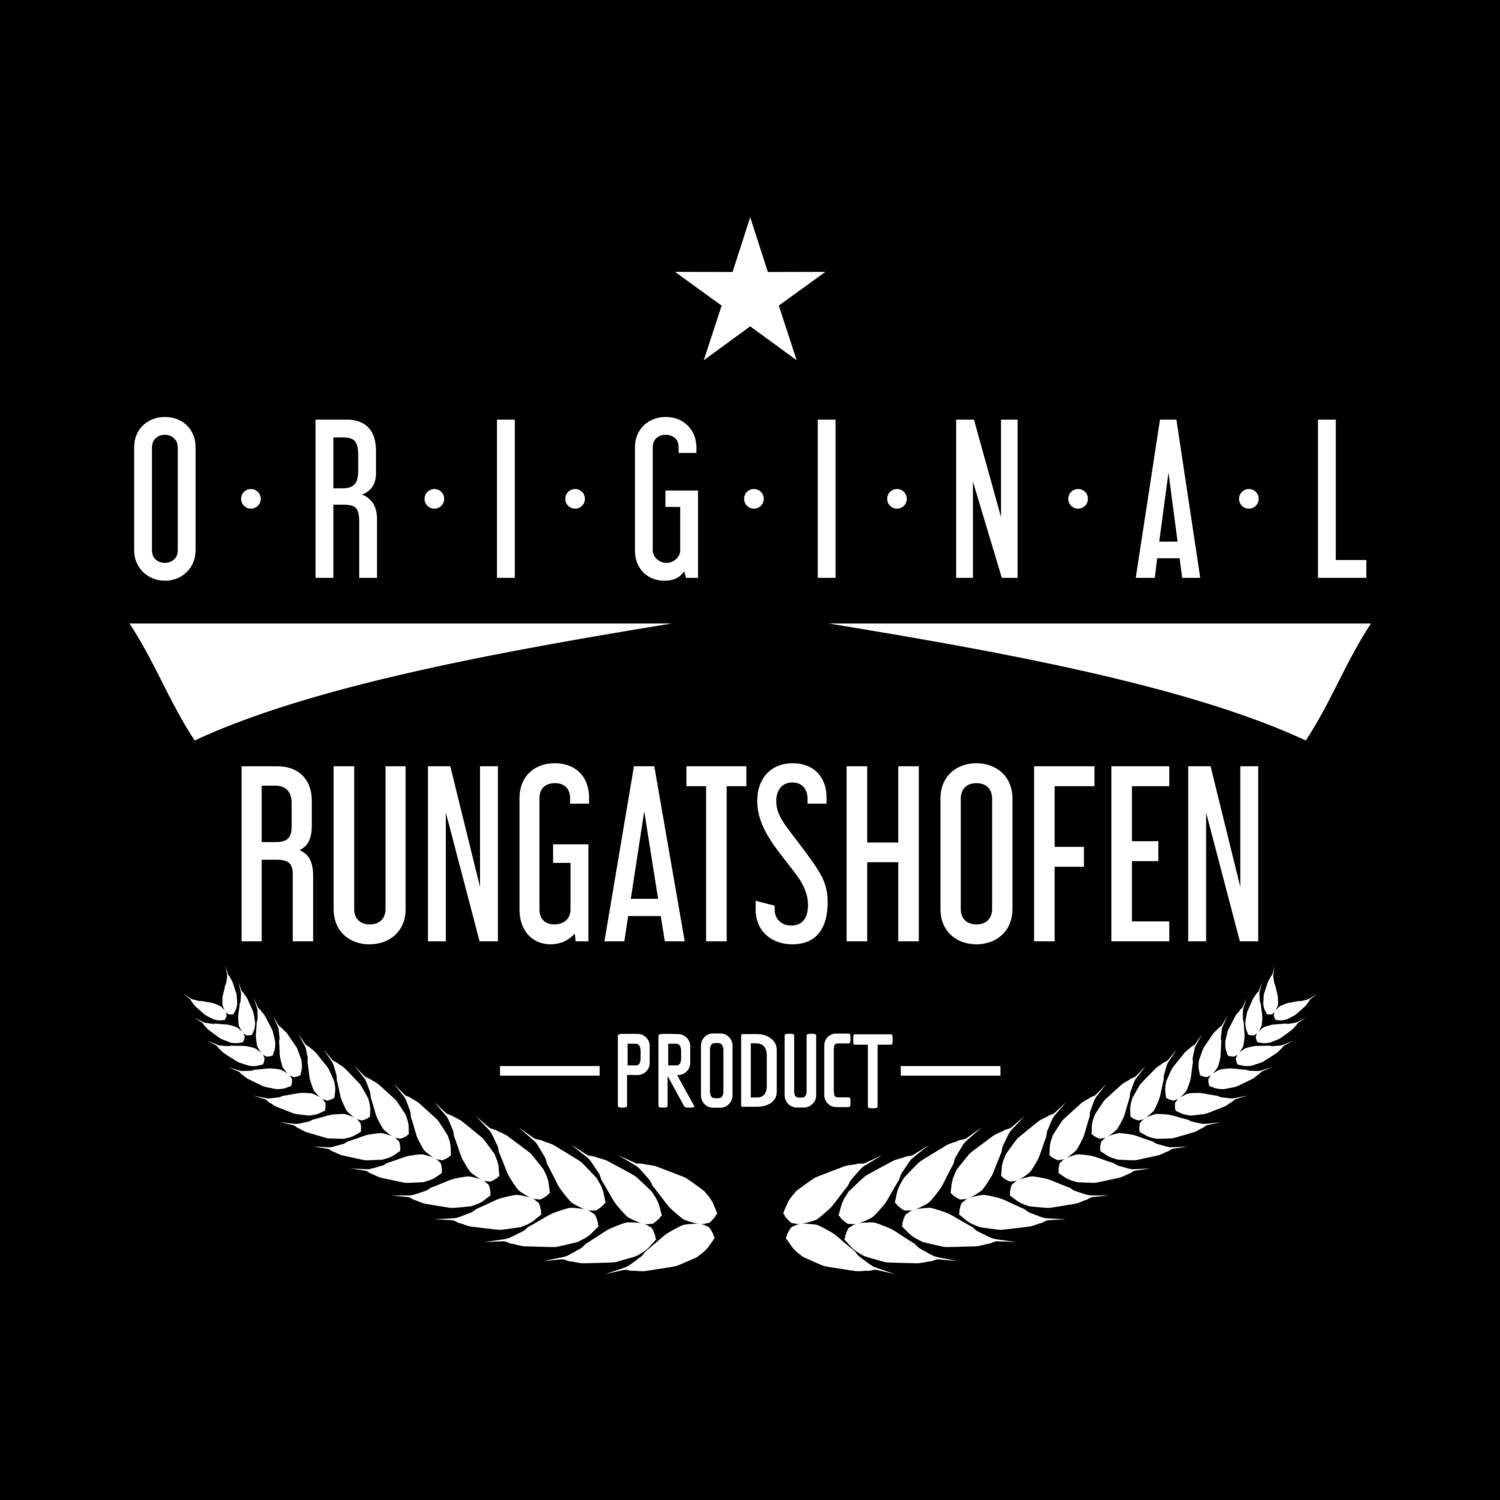 Rungatshofen T-Shirt »Original Product«